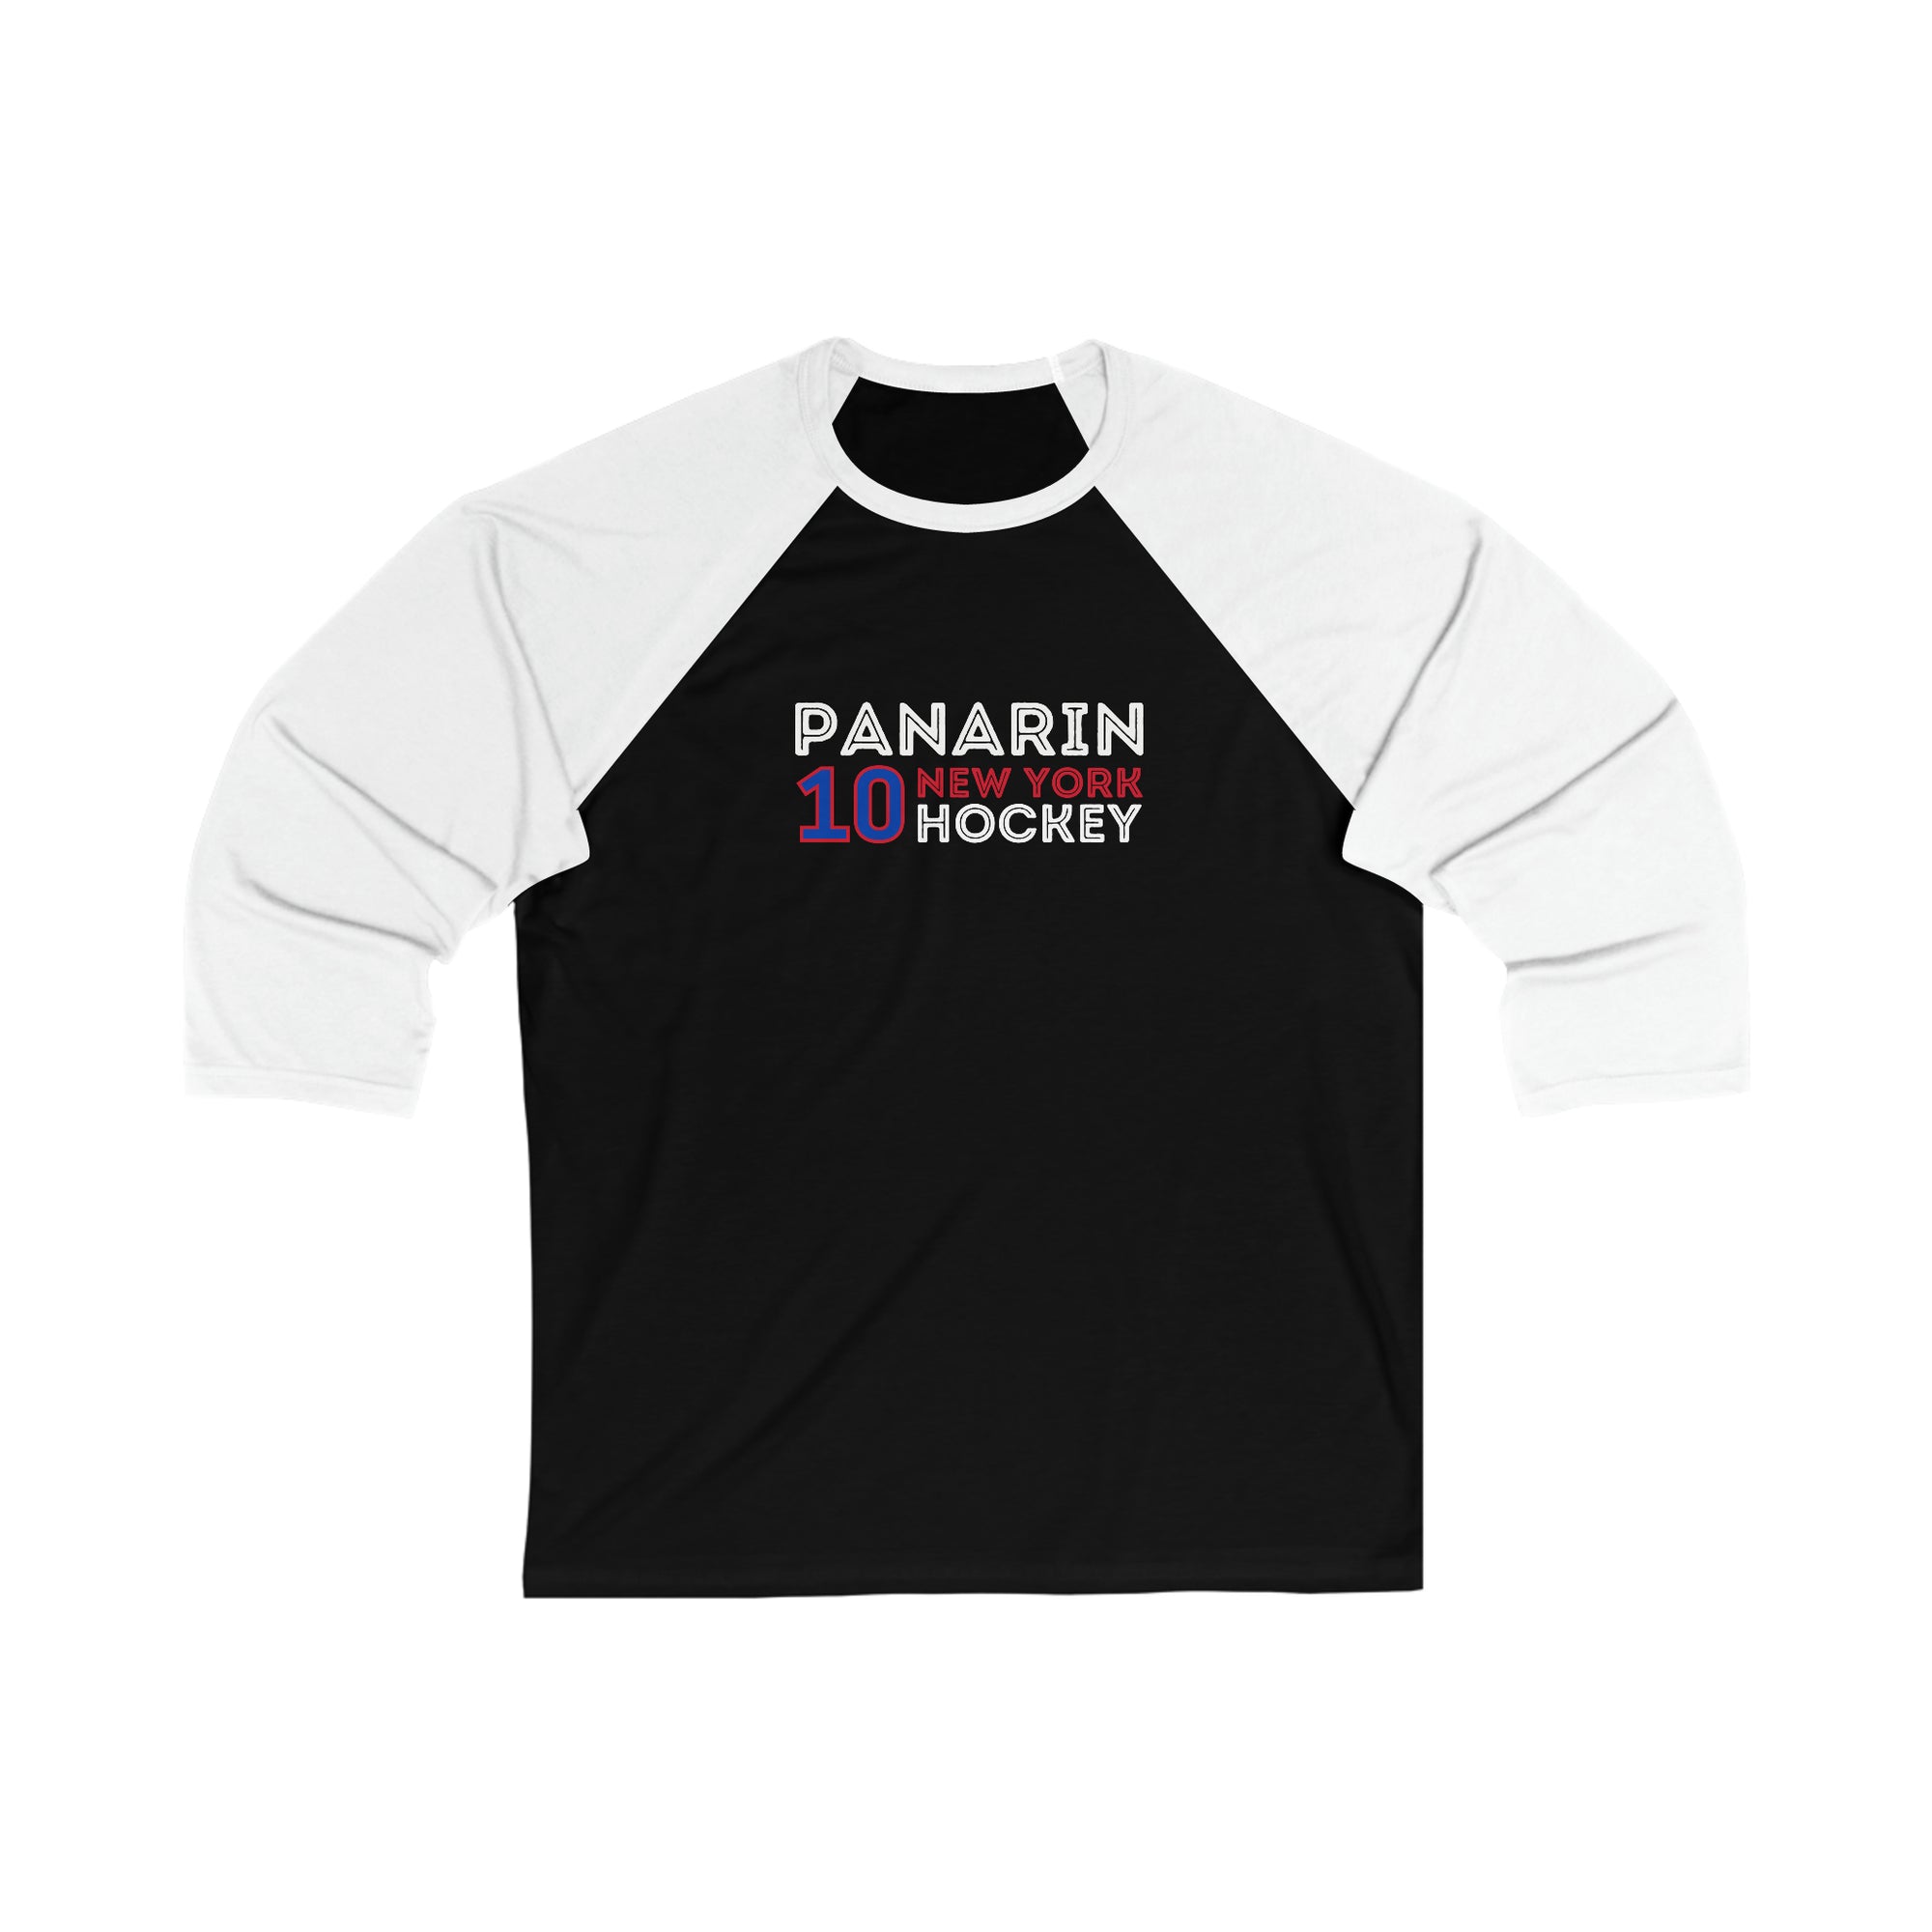 Artemi Panarin Shirt Graphic Sport Tshirt Player Best Seller 